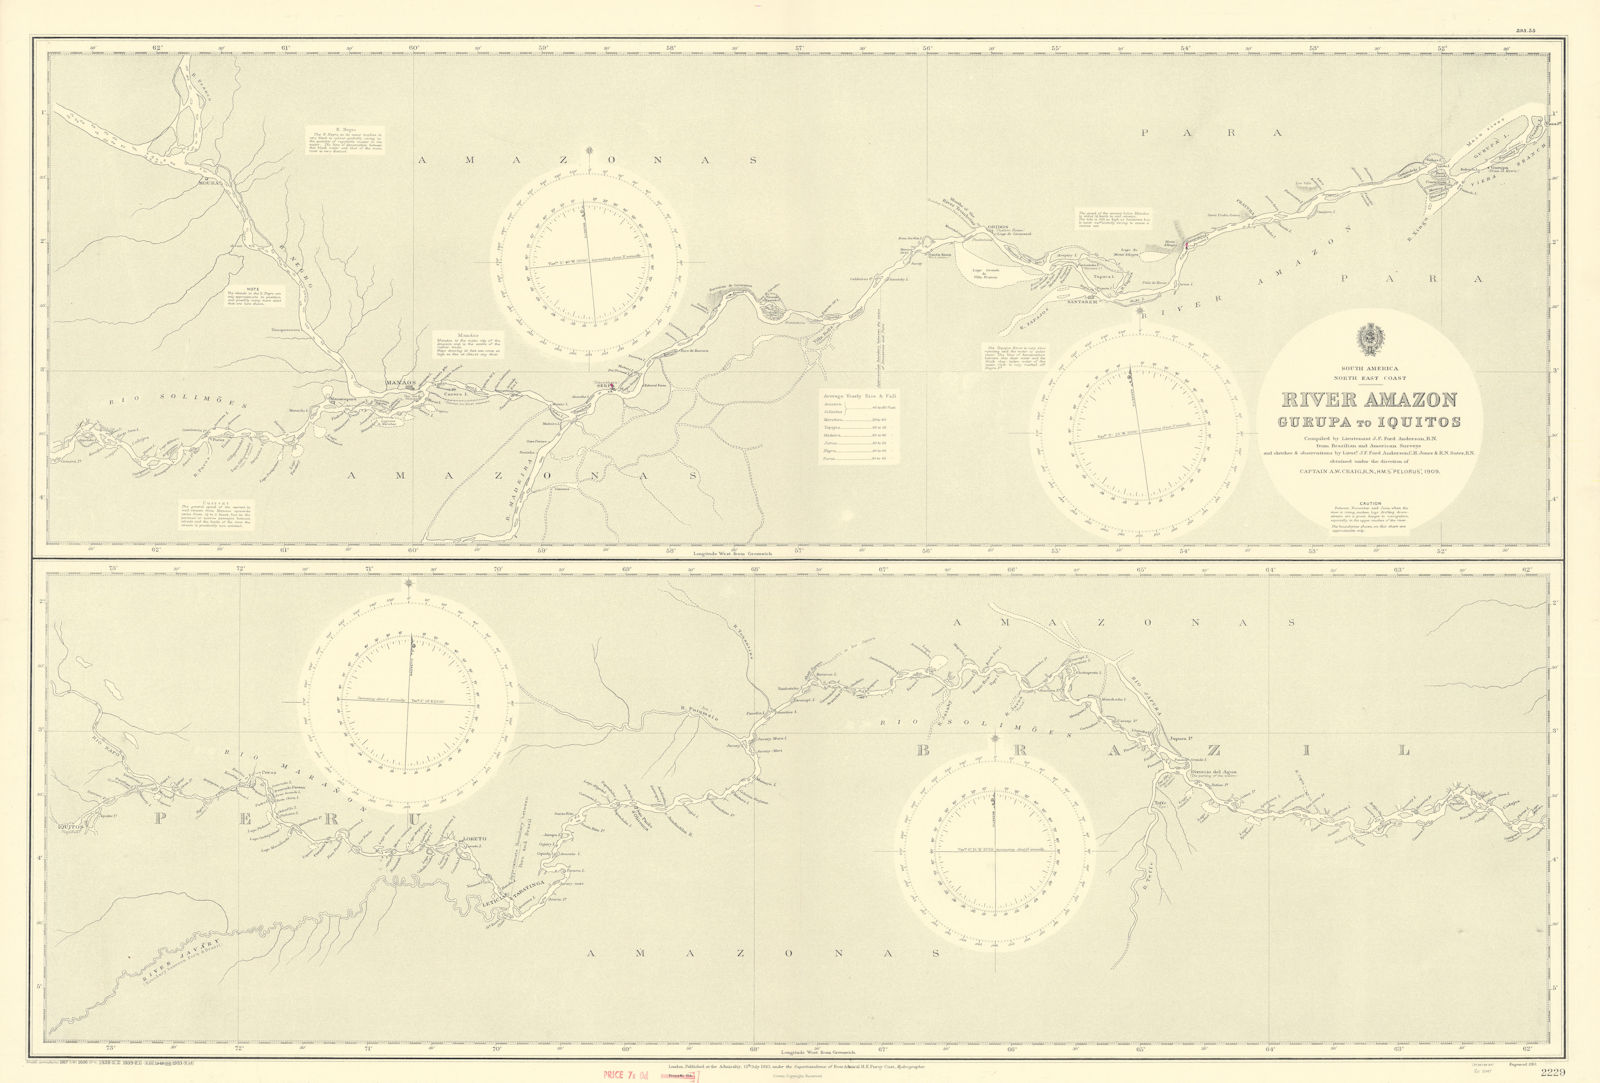 River Amazon. Gurupa - Iquitos. Brazil Peru. ADMIRALTY sea chart 1910 (1953) map